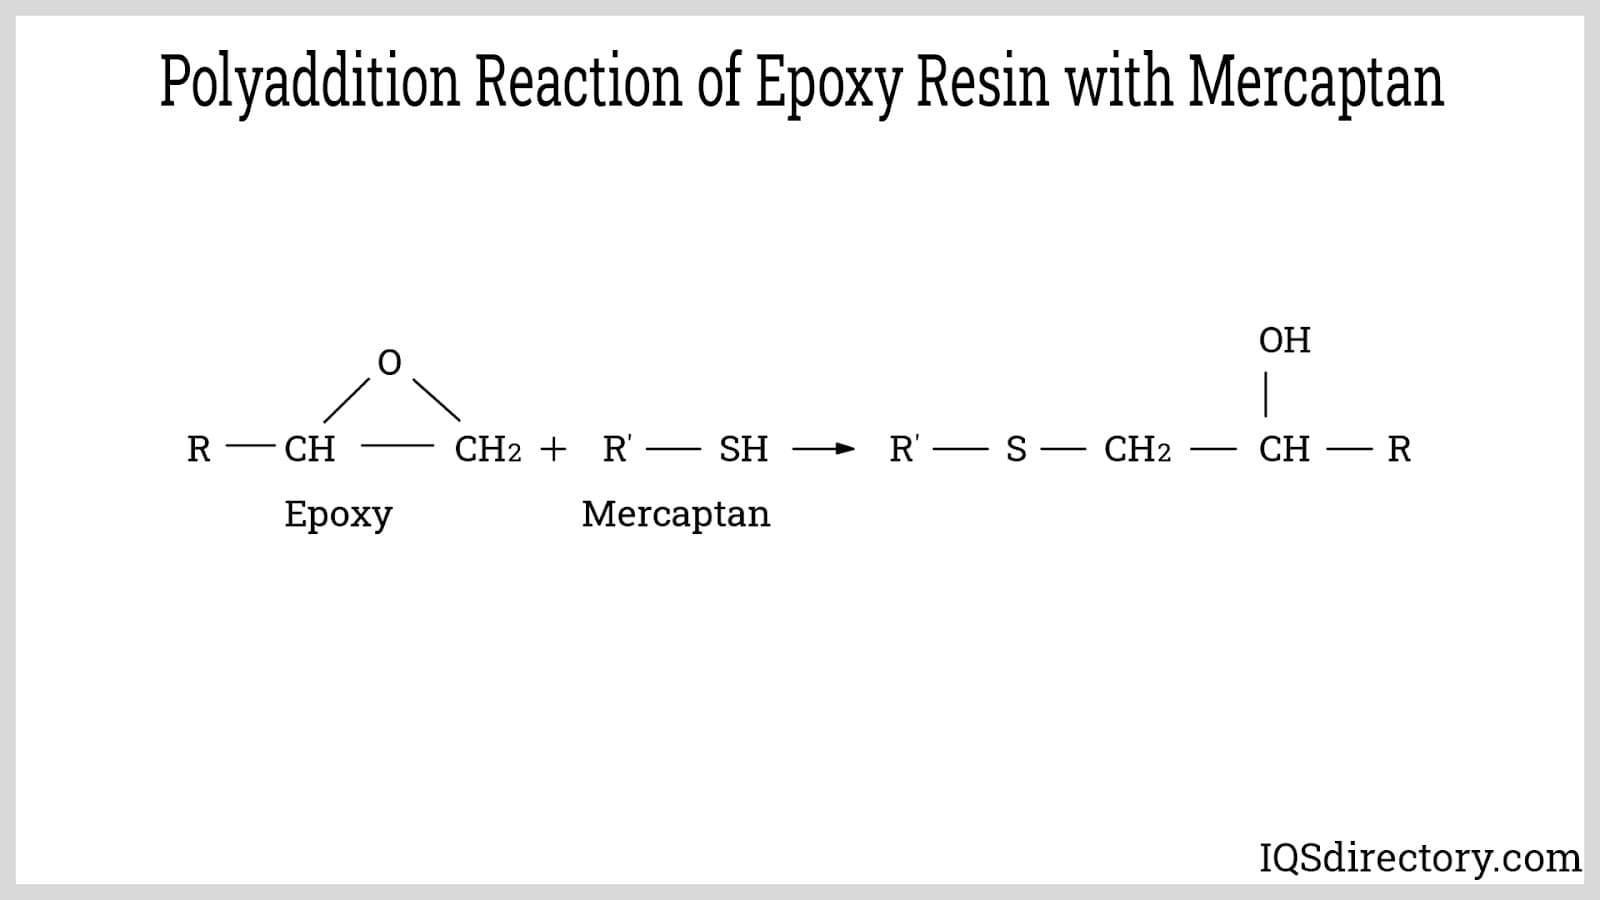 Polyaddition Reaction of Epoxy Resin with Mercaptan